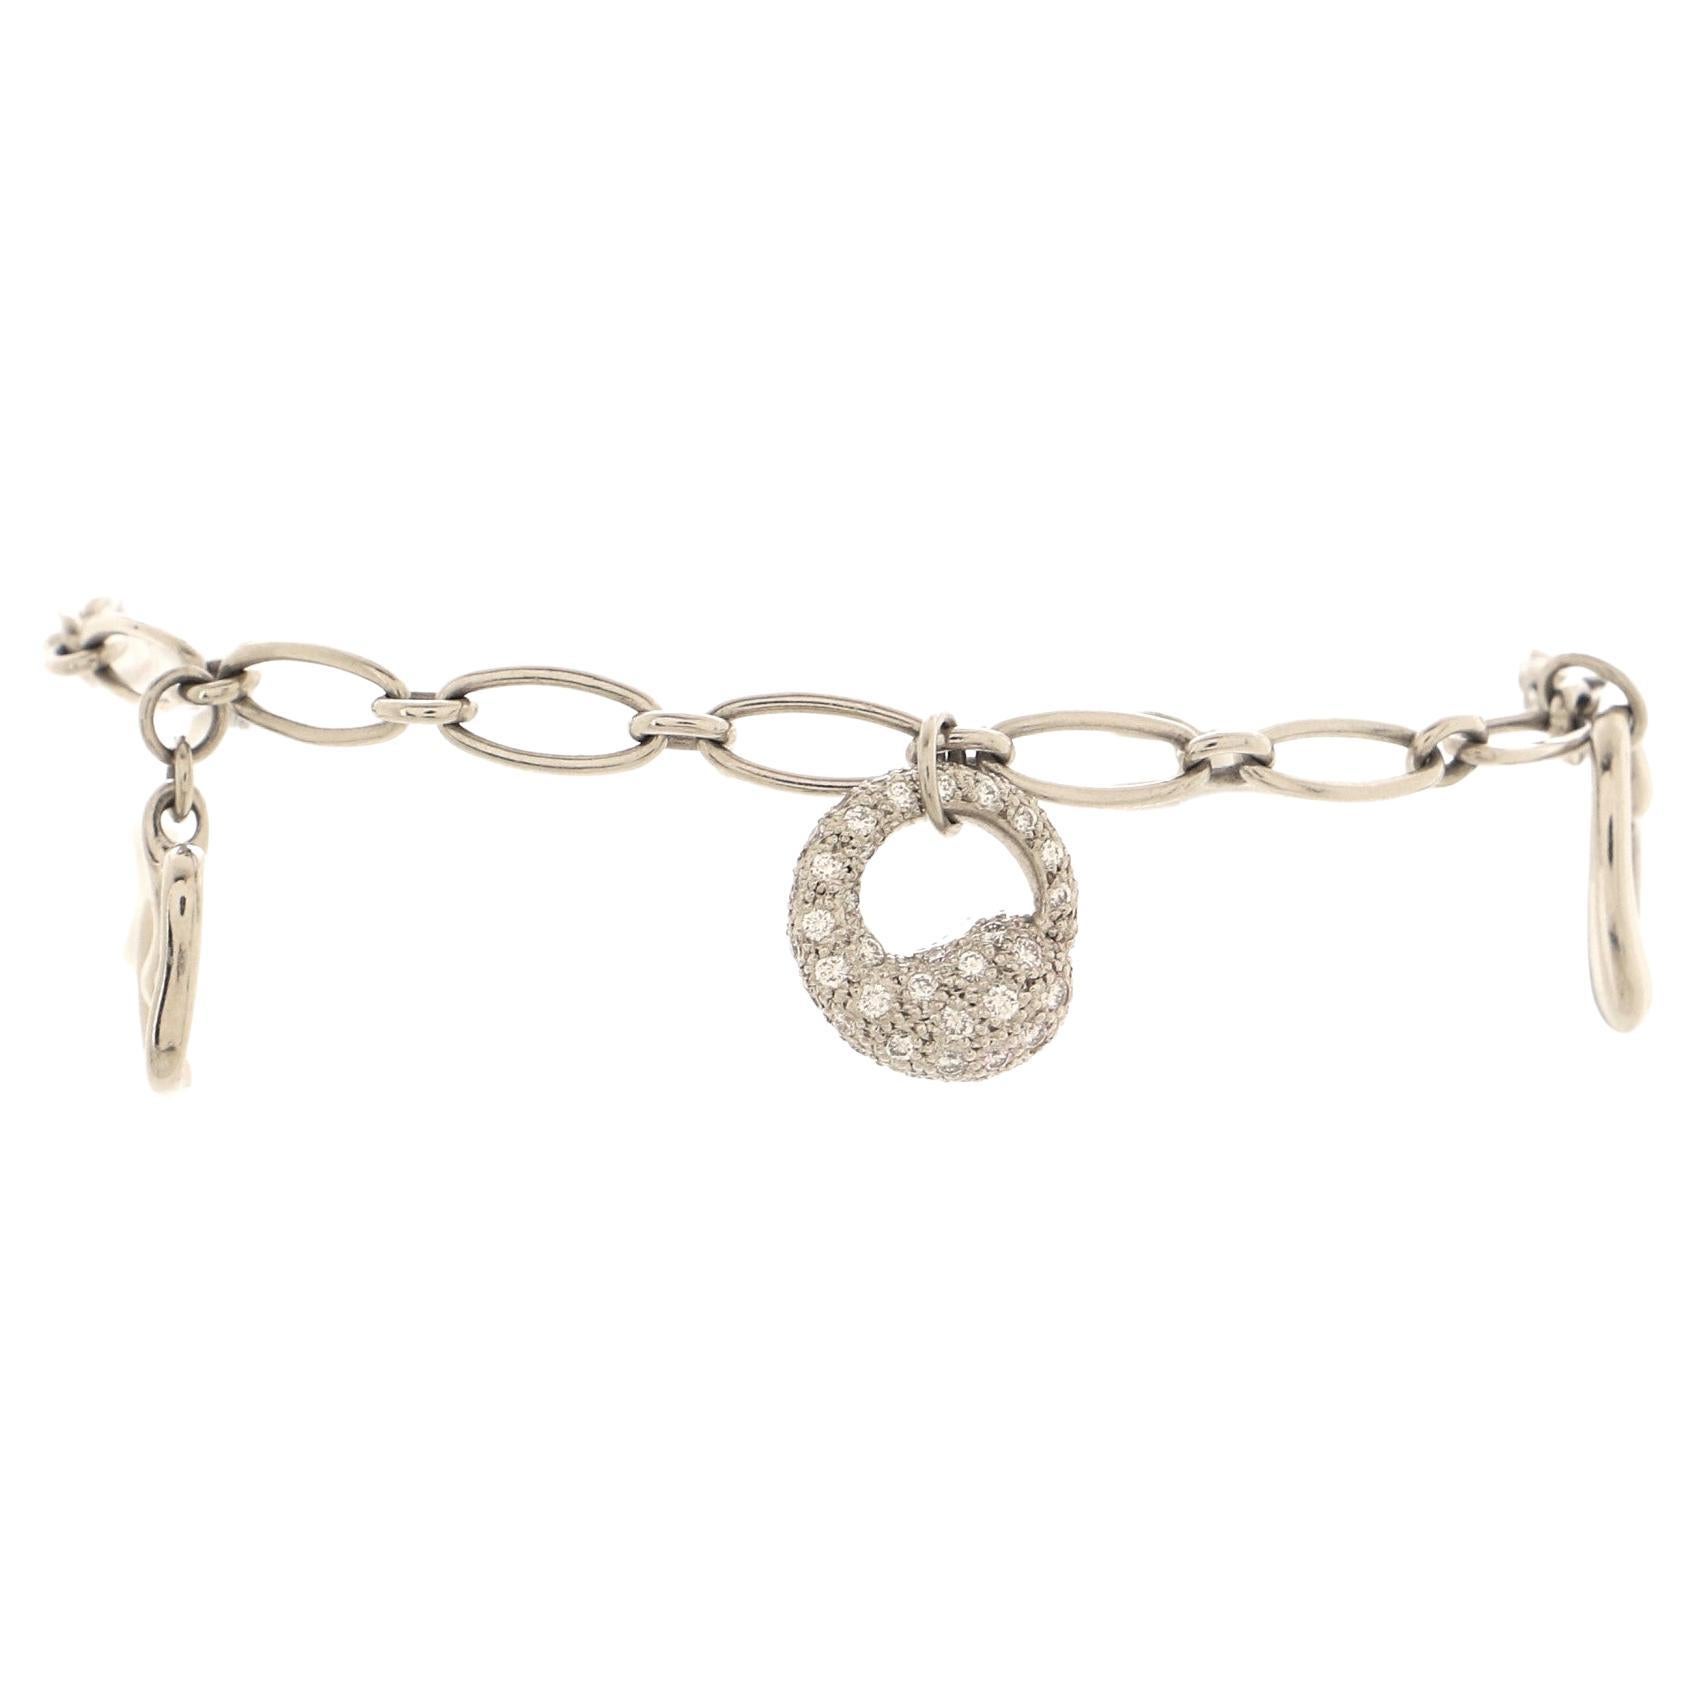 Tiffany & Co. Elsa Peretti Five Charm Bracelet Platinum with Diamonds